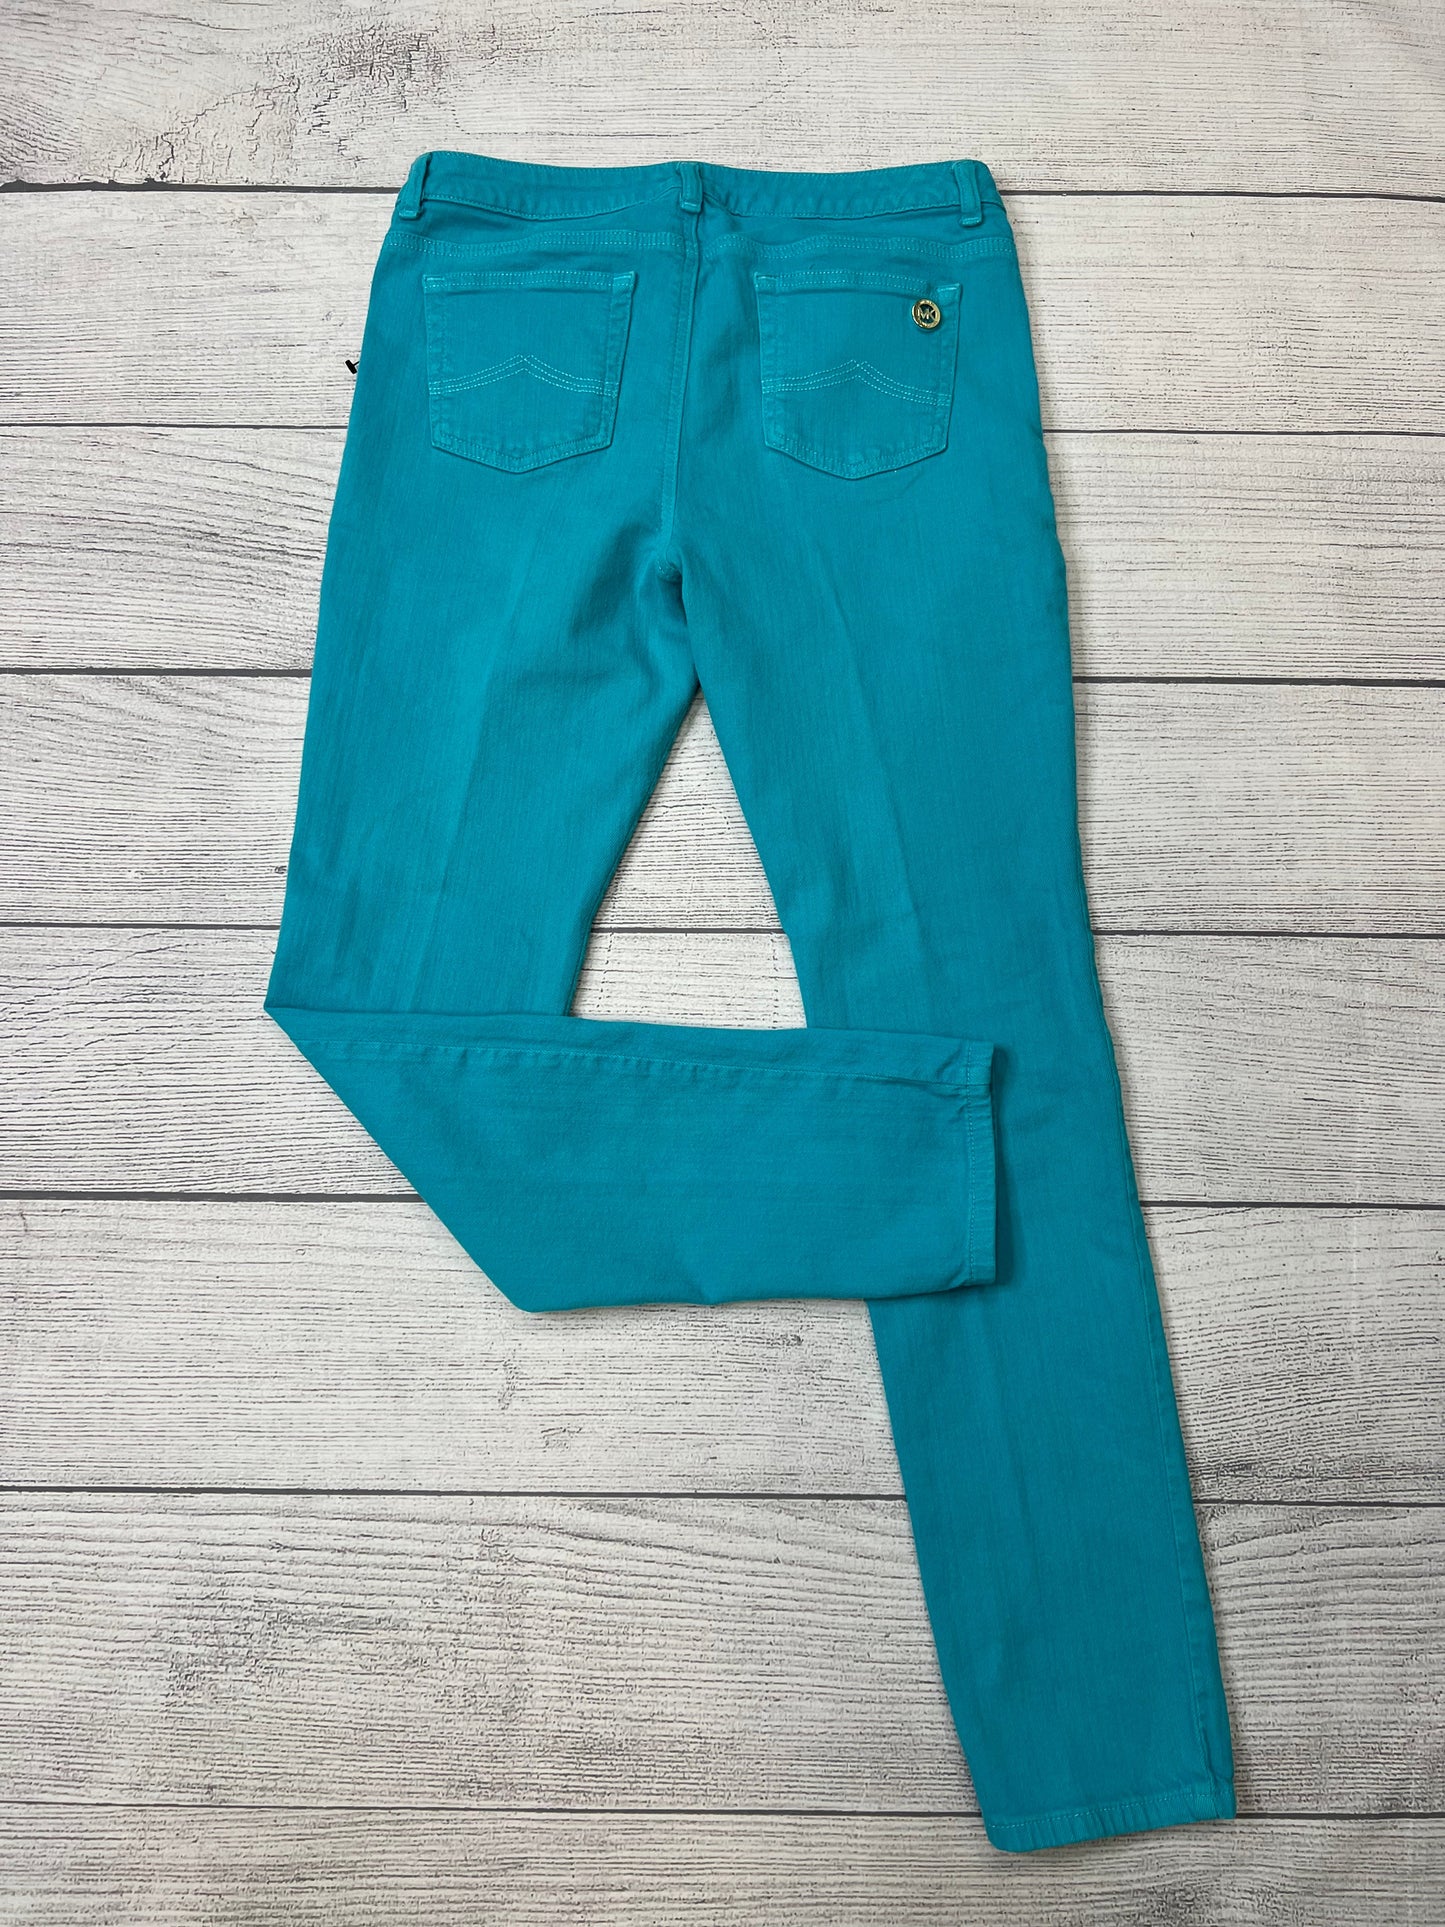 Jeans Designer By Michael Kors  Size: 10